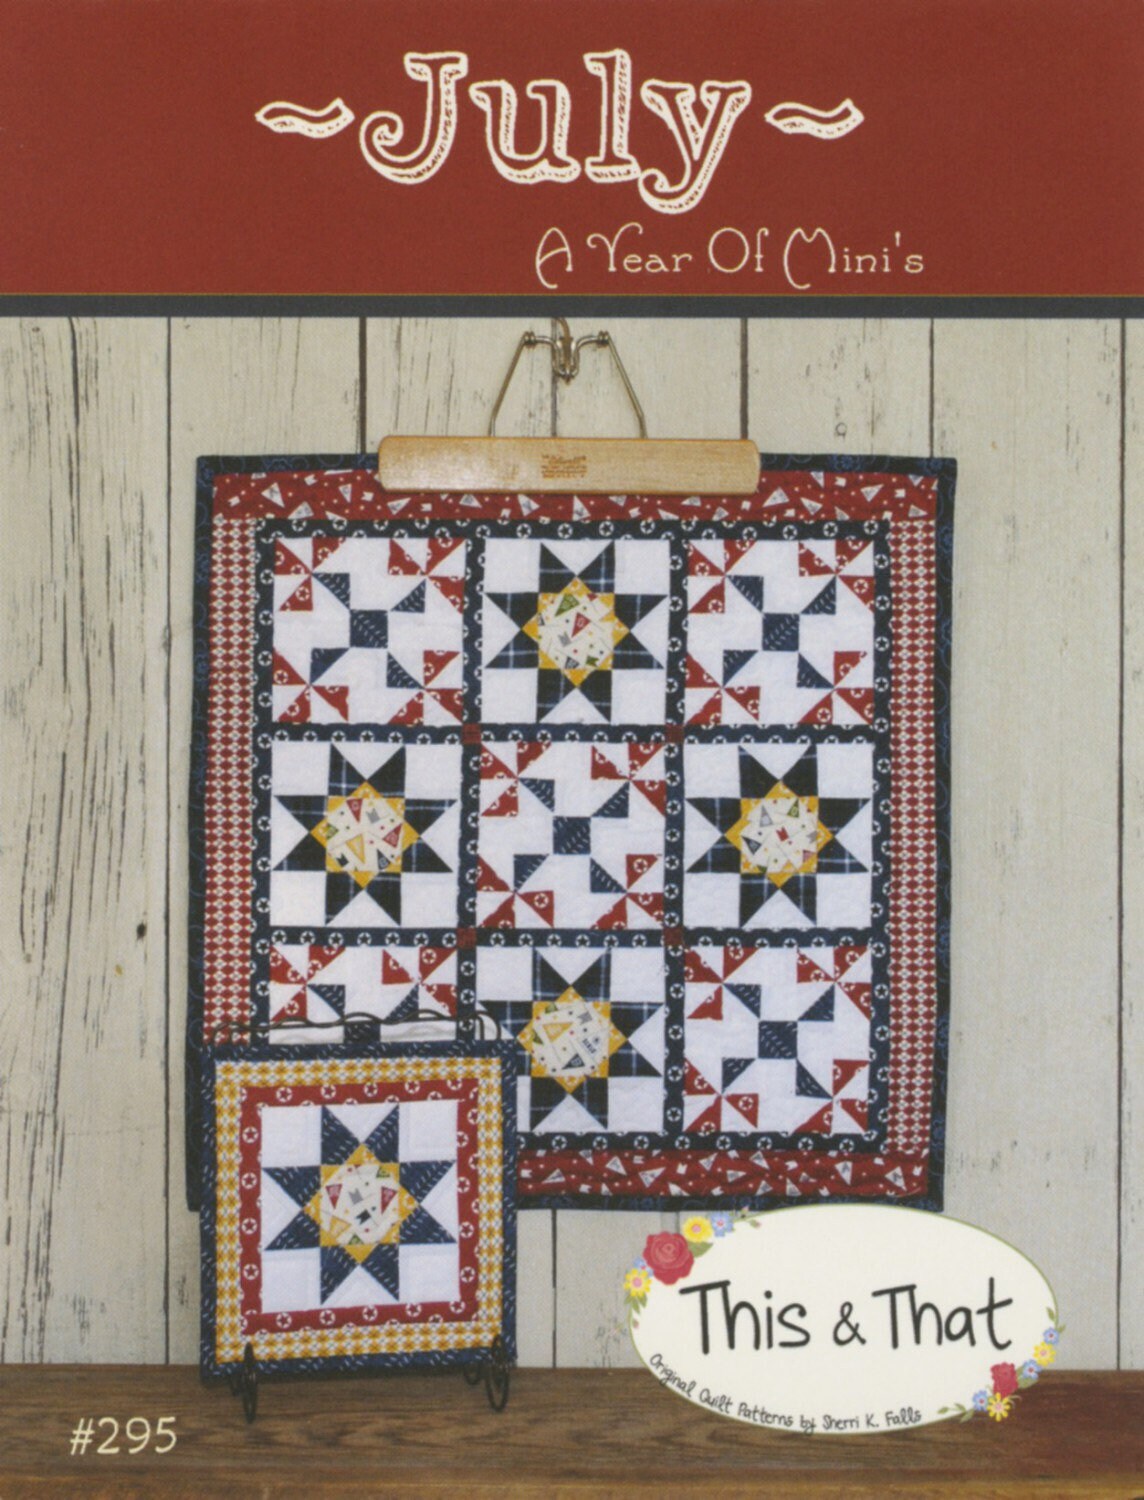 A Year of Minis - July Mini Quilt Pattern - This & That - Sherri Falls